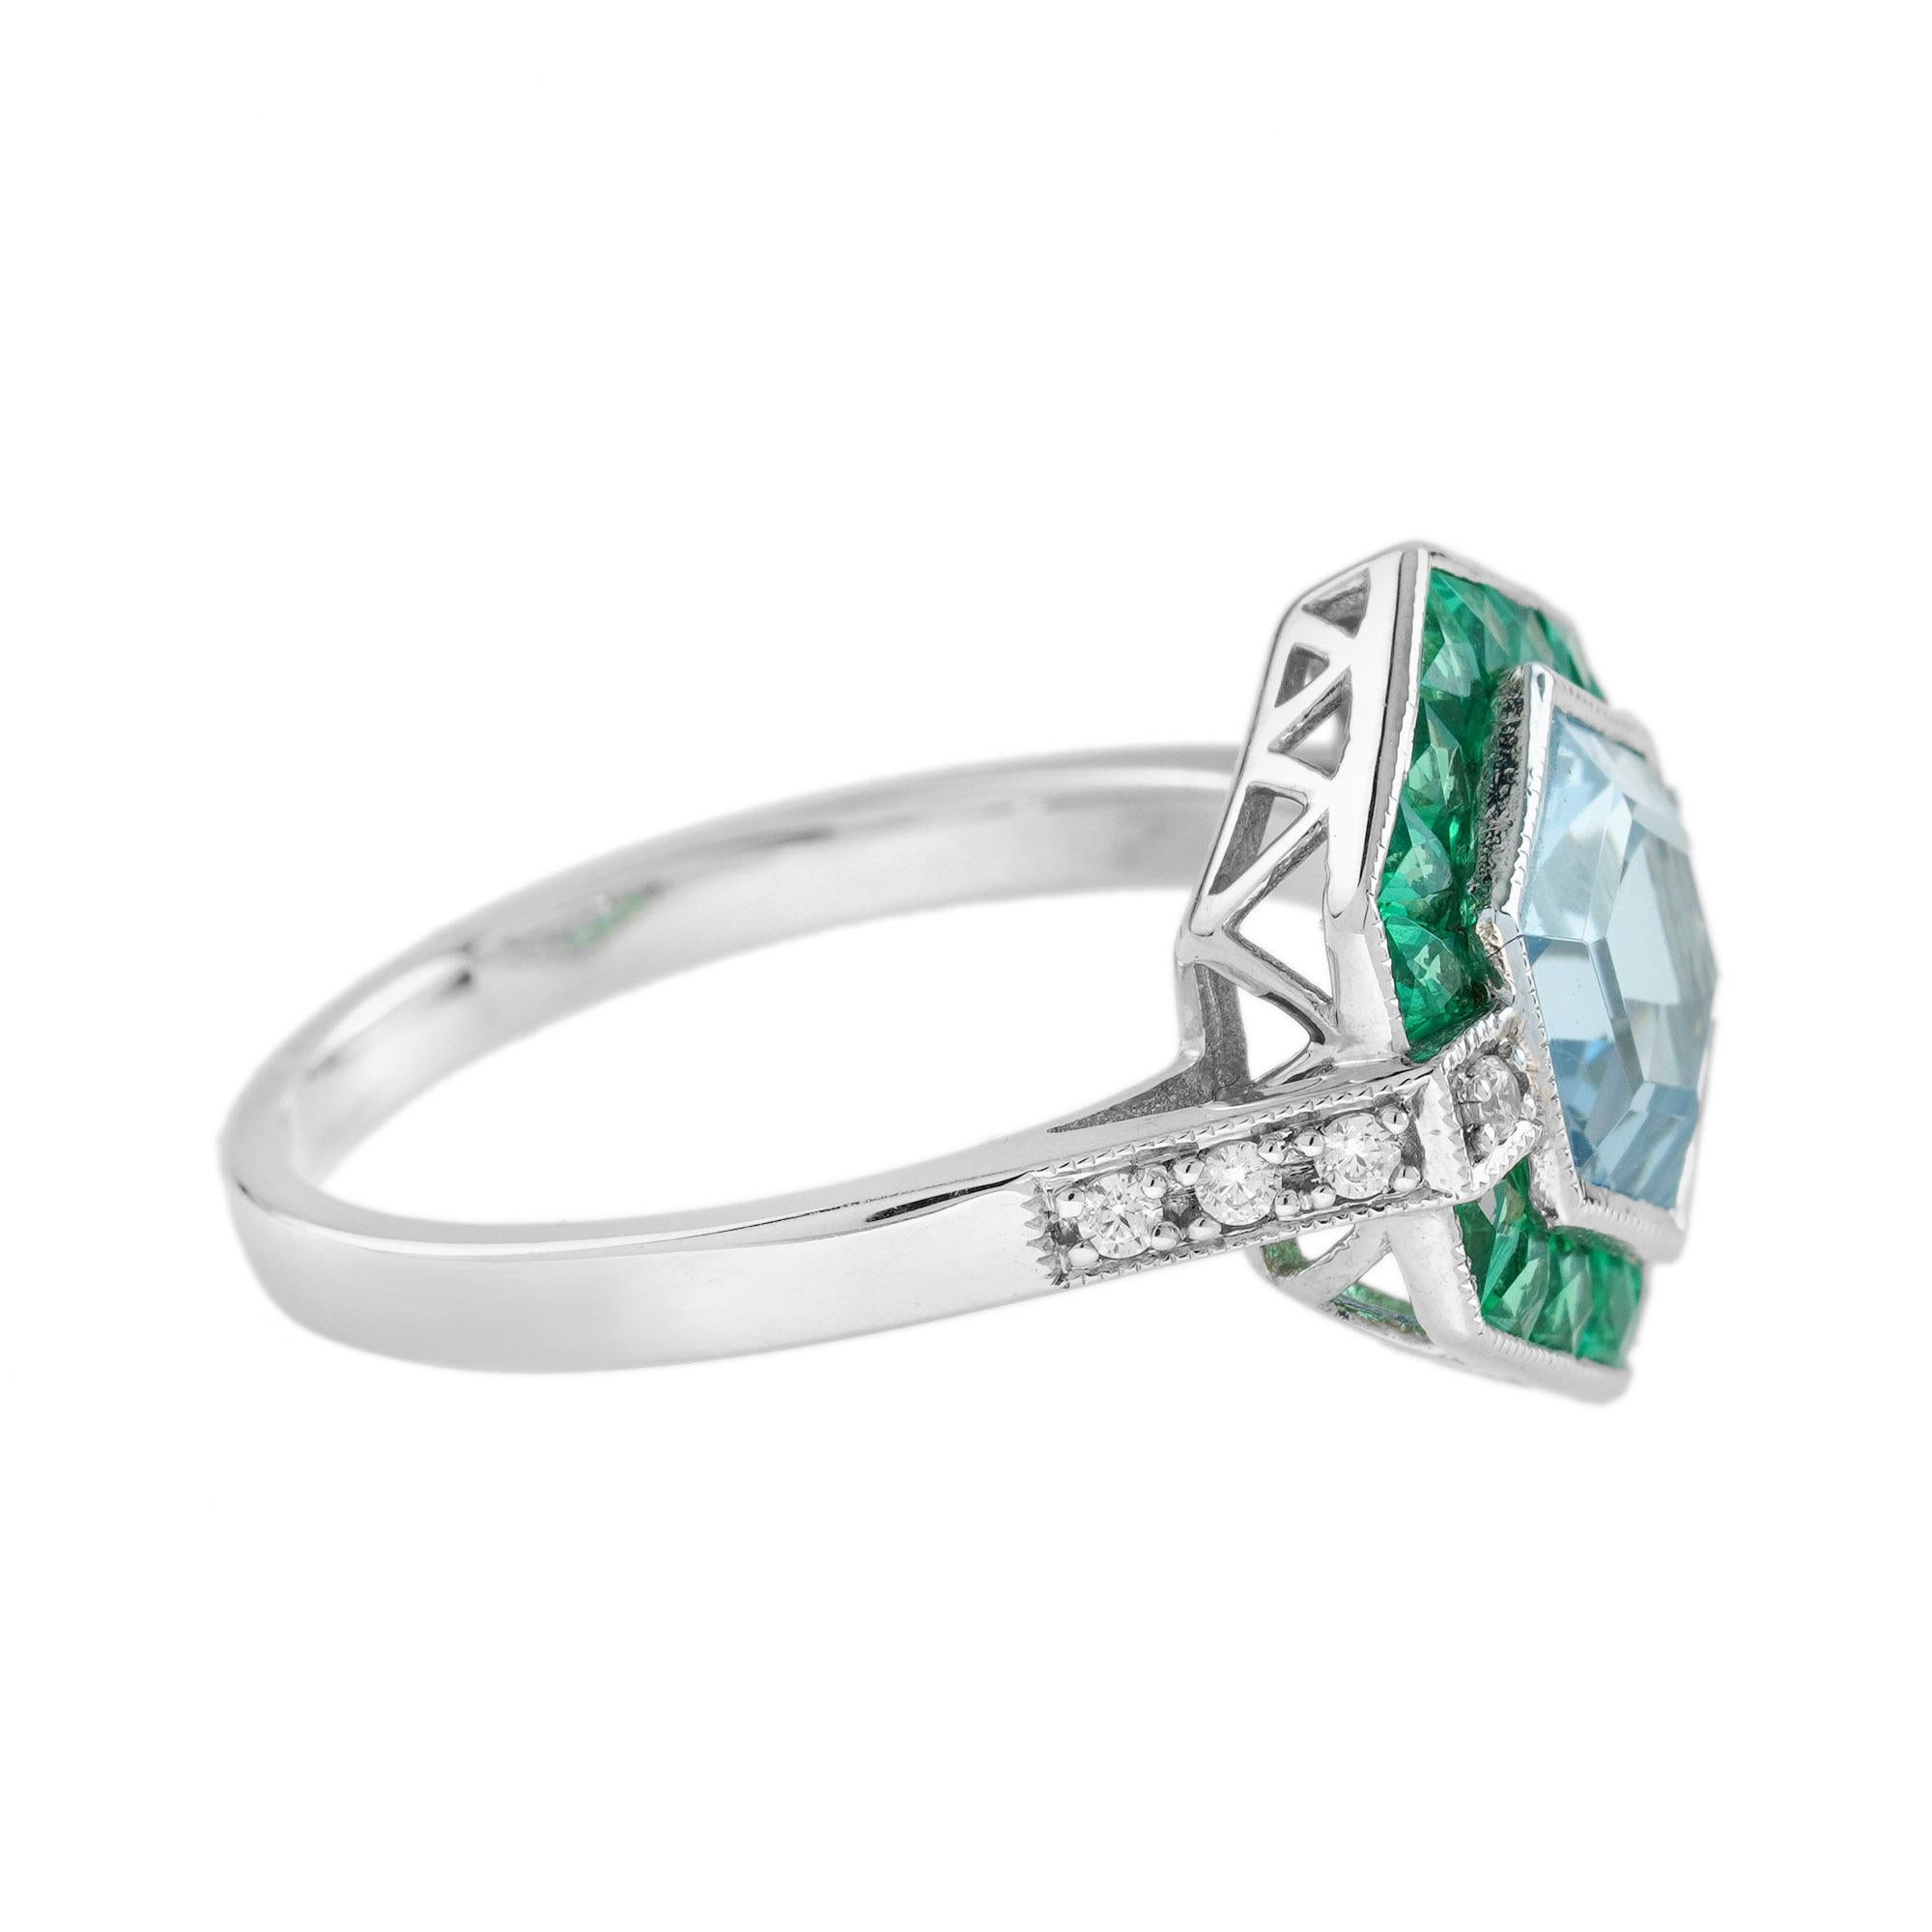 For Sale:  Aquamarine Emerald Diamond Art Deco Style Hexagon Ring in 18K White Gold 4